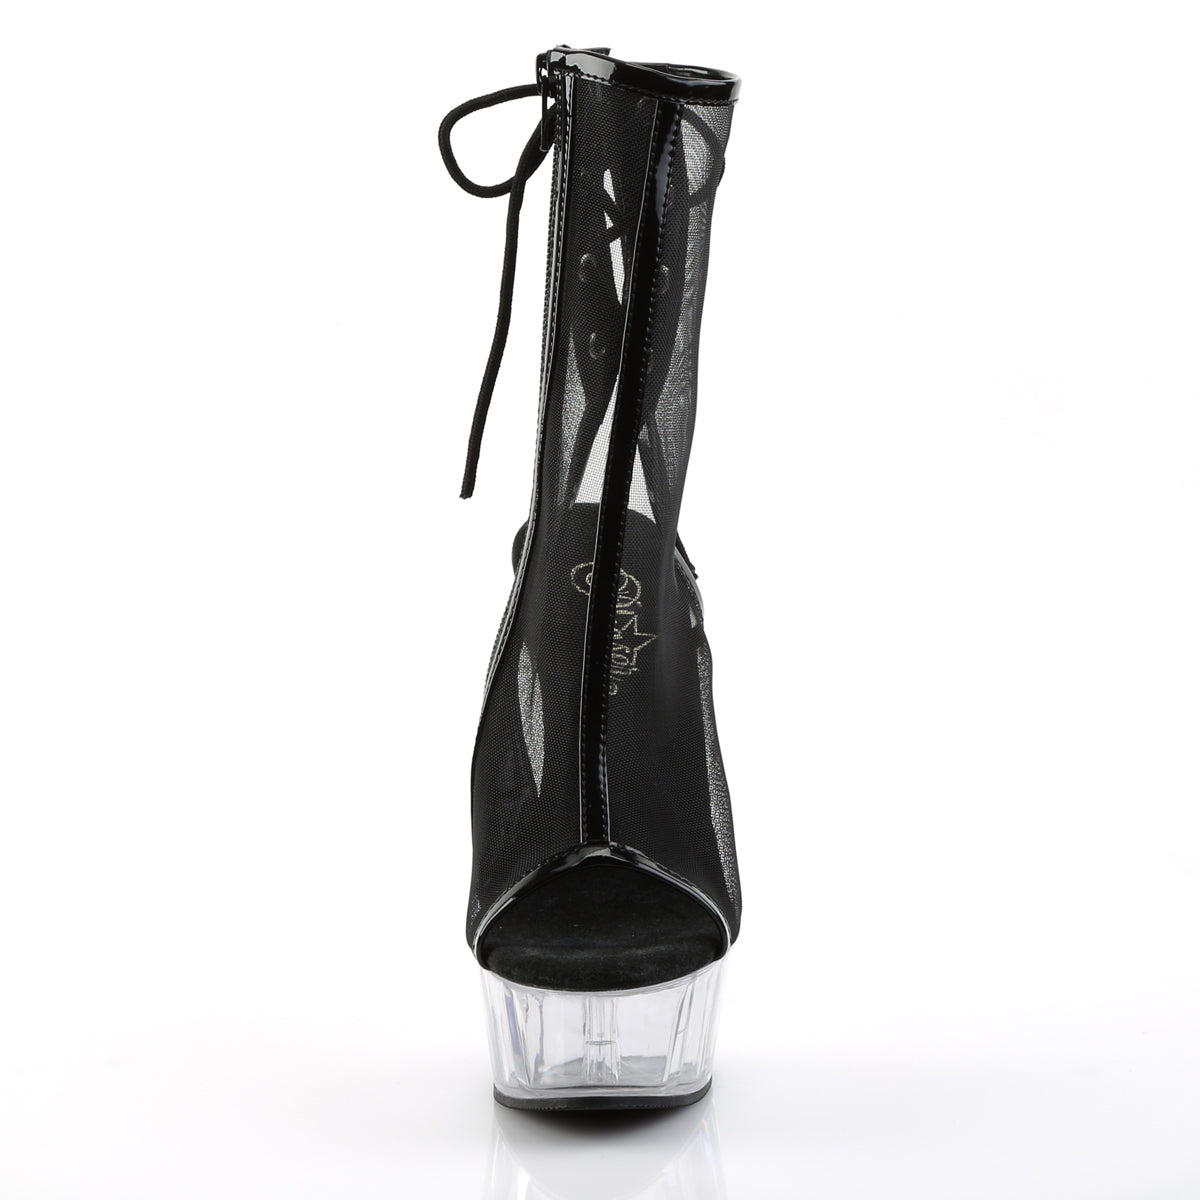 DELIGHT-1018MSH Pleaser 6" Heel Black Pole Dancing Platforms-Pleaser- Sexy Shoes Alternative Footwear